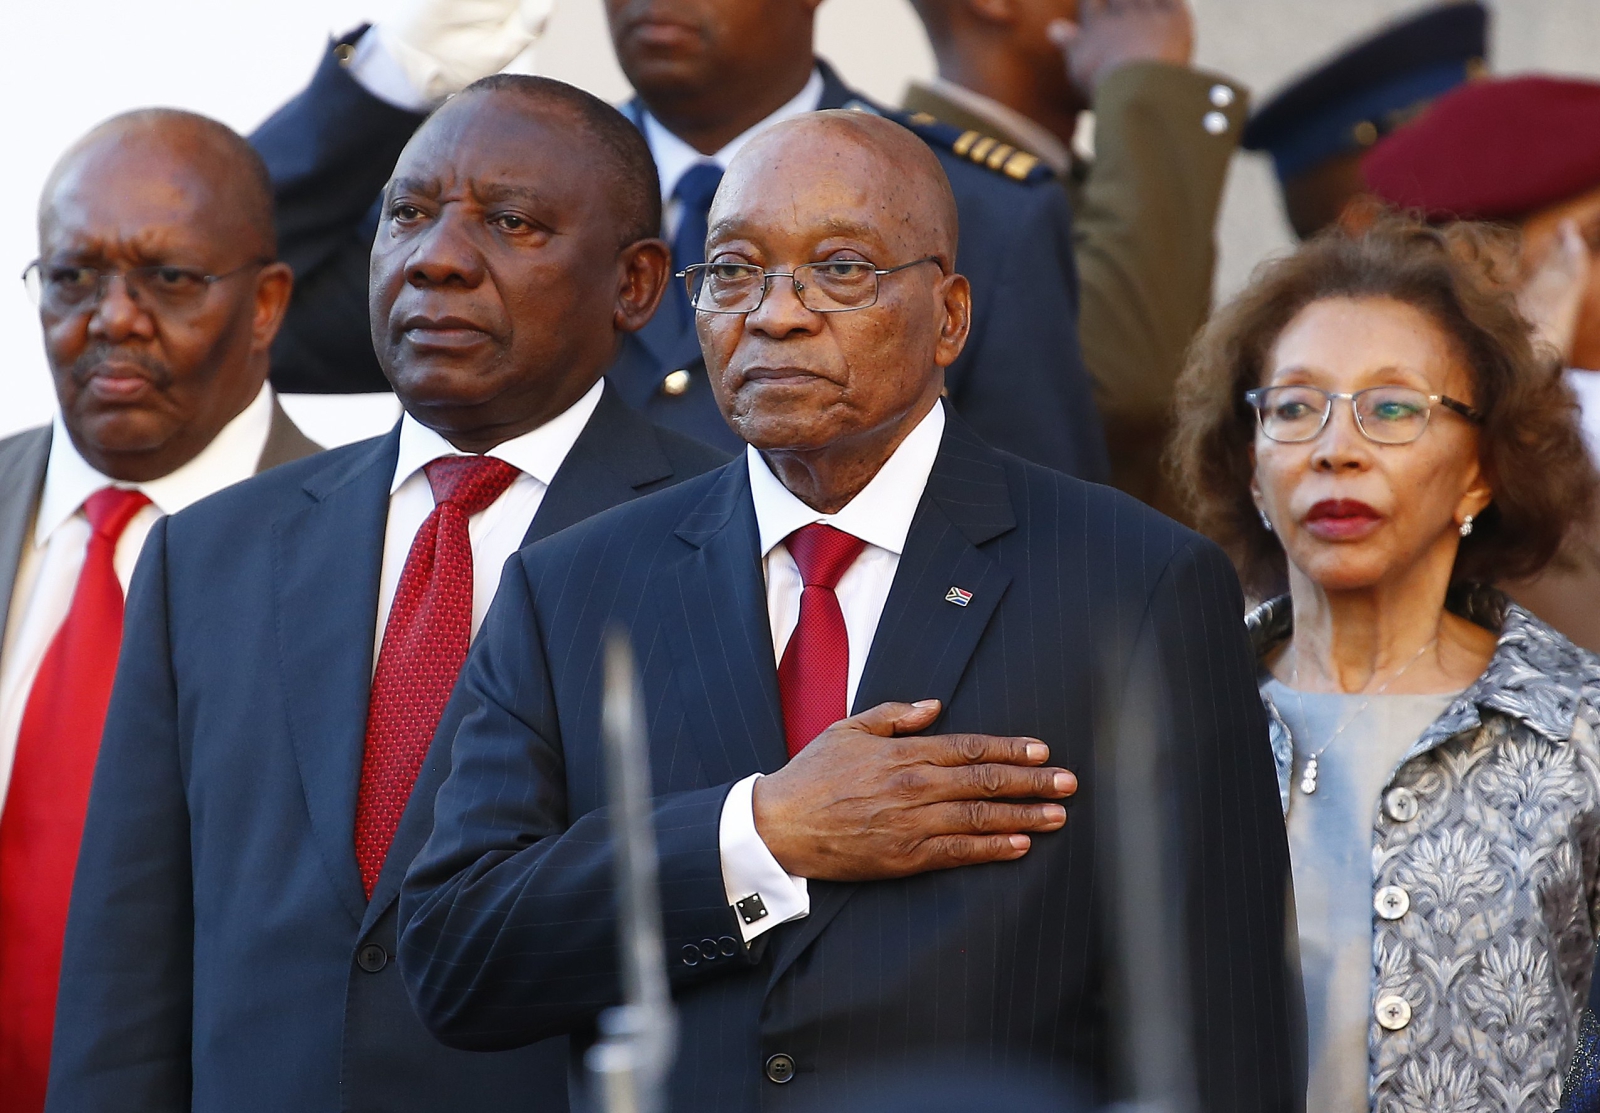 Prezydent Jacob Zuma na otwarciu parlamentu w Cape Town, w RPA.
Fot. PAP/EPA/NIC BOTHMA / POOL